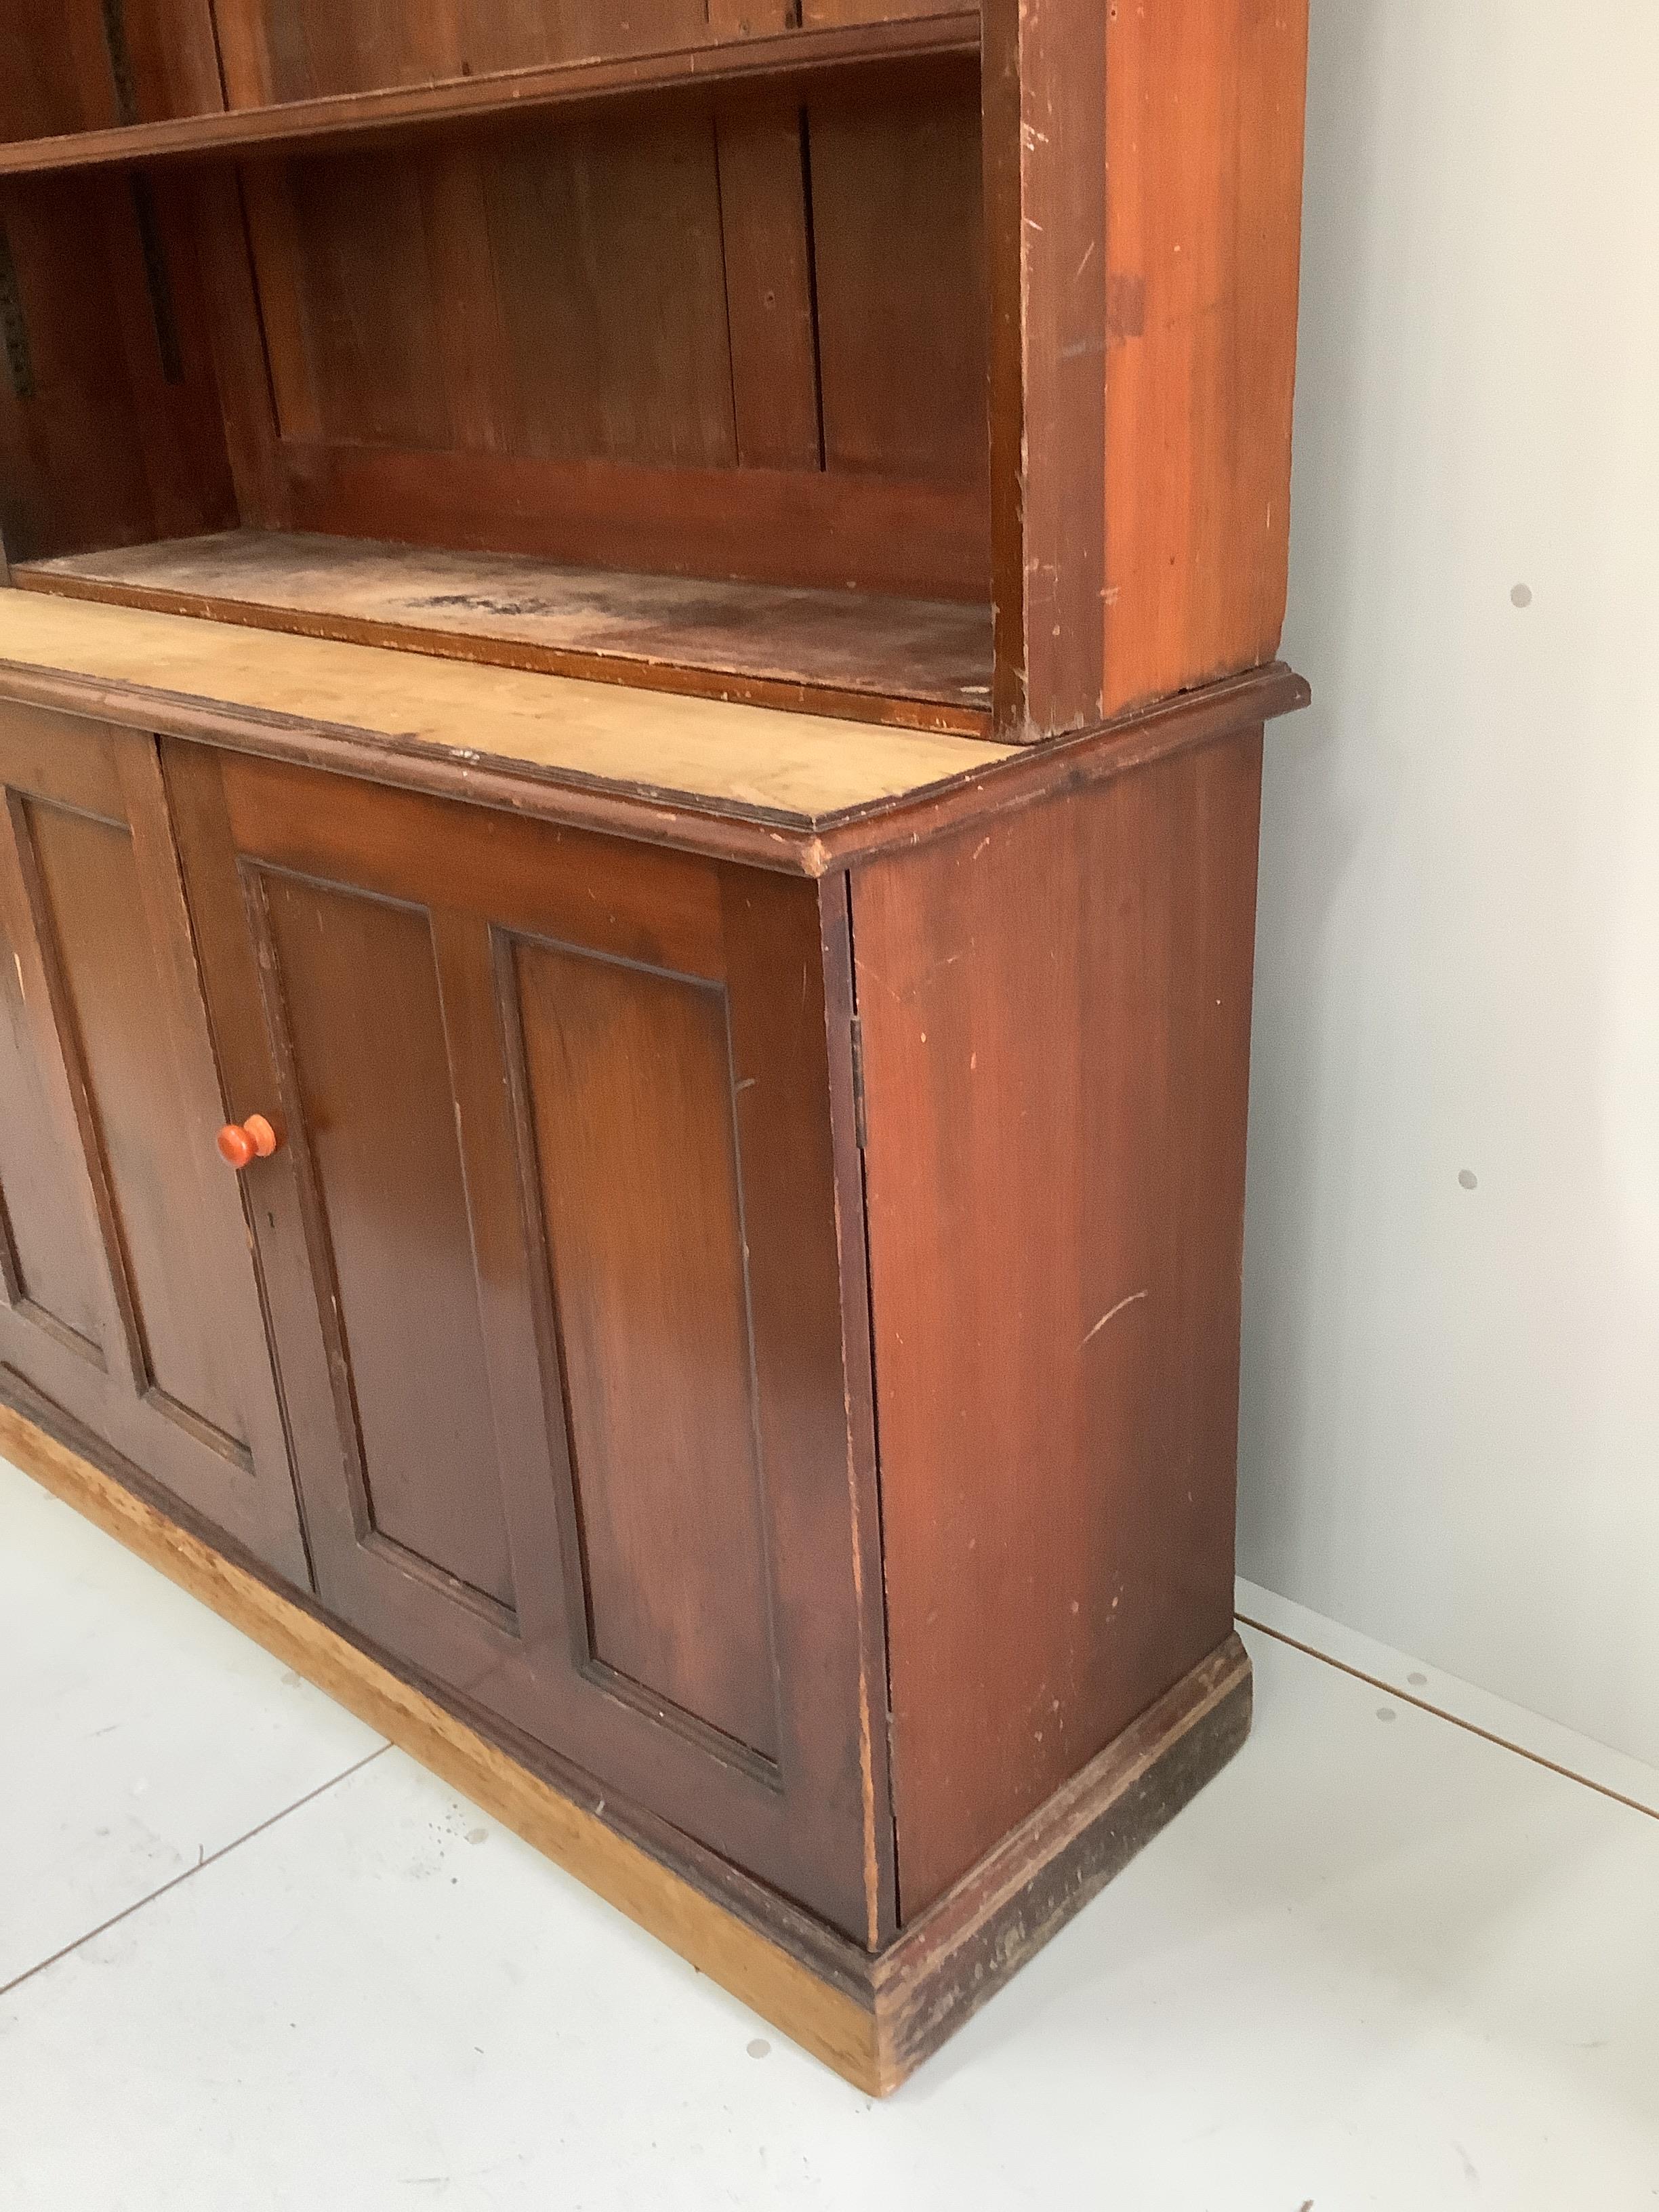 A Victorian mahogany bookcase cupboard, width 127cm, depth 47cm, height 221cm